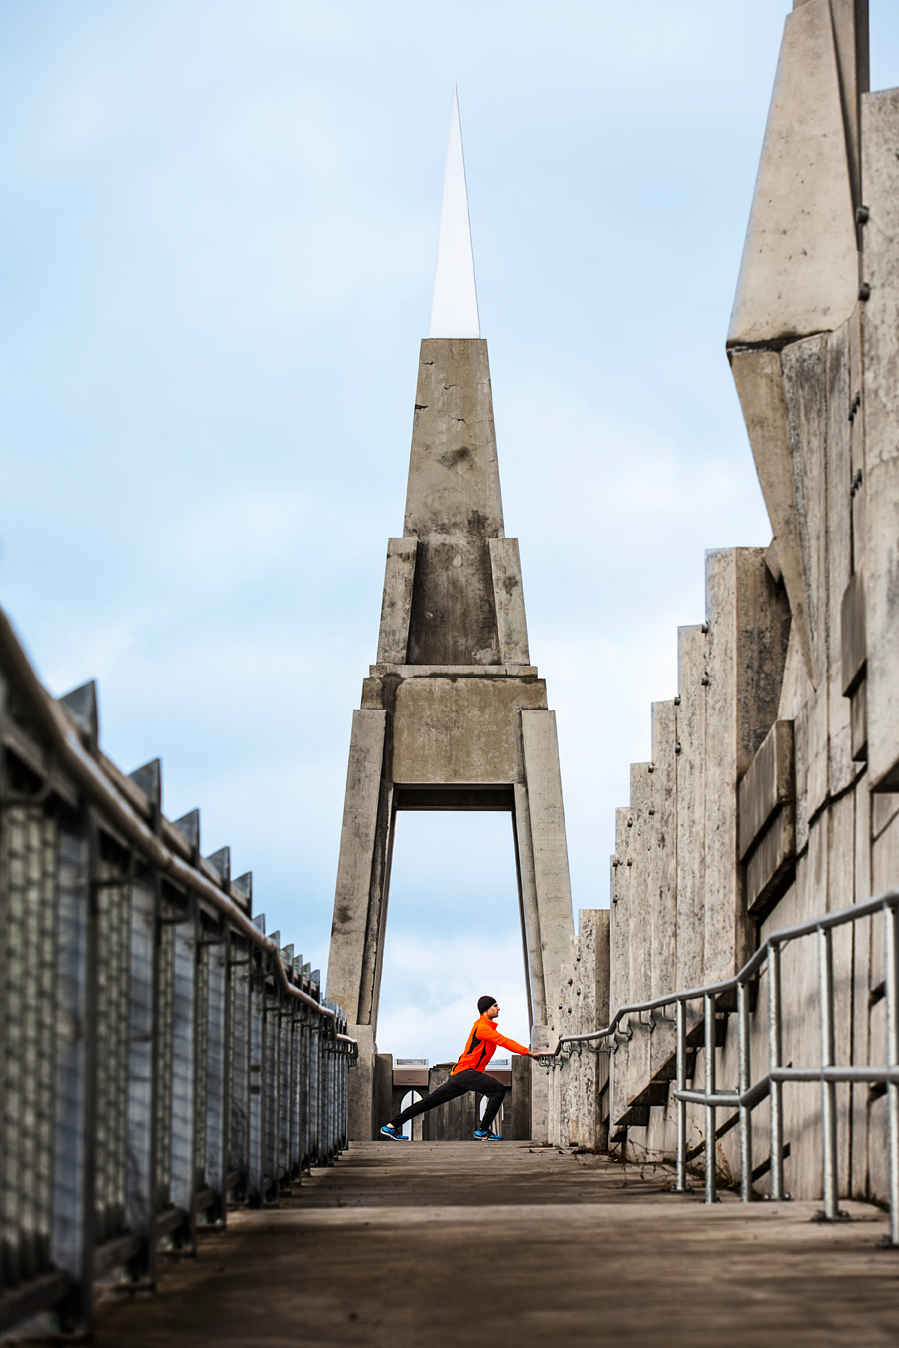 Runner in orange coat stretching in urban city landscape, tower behind